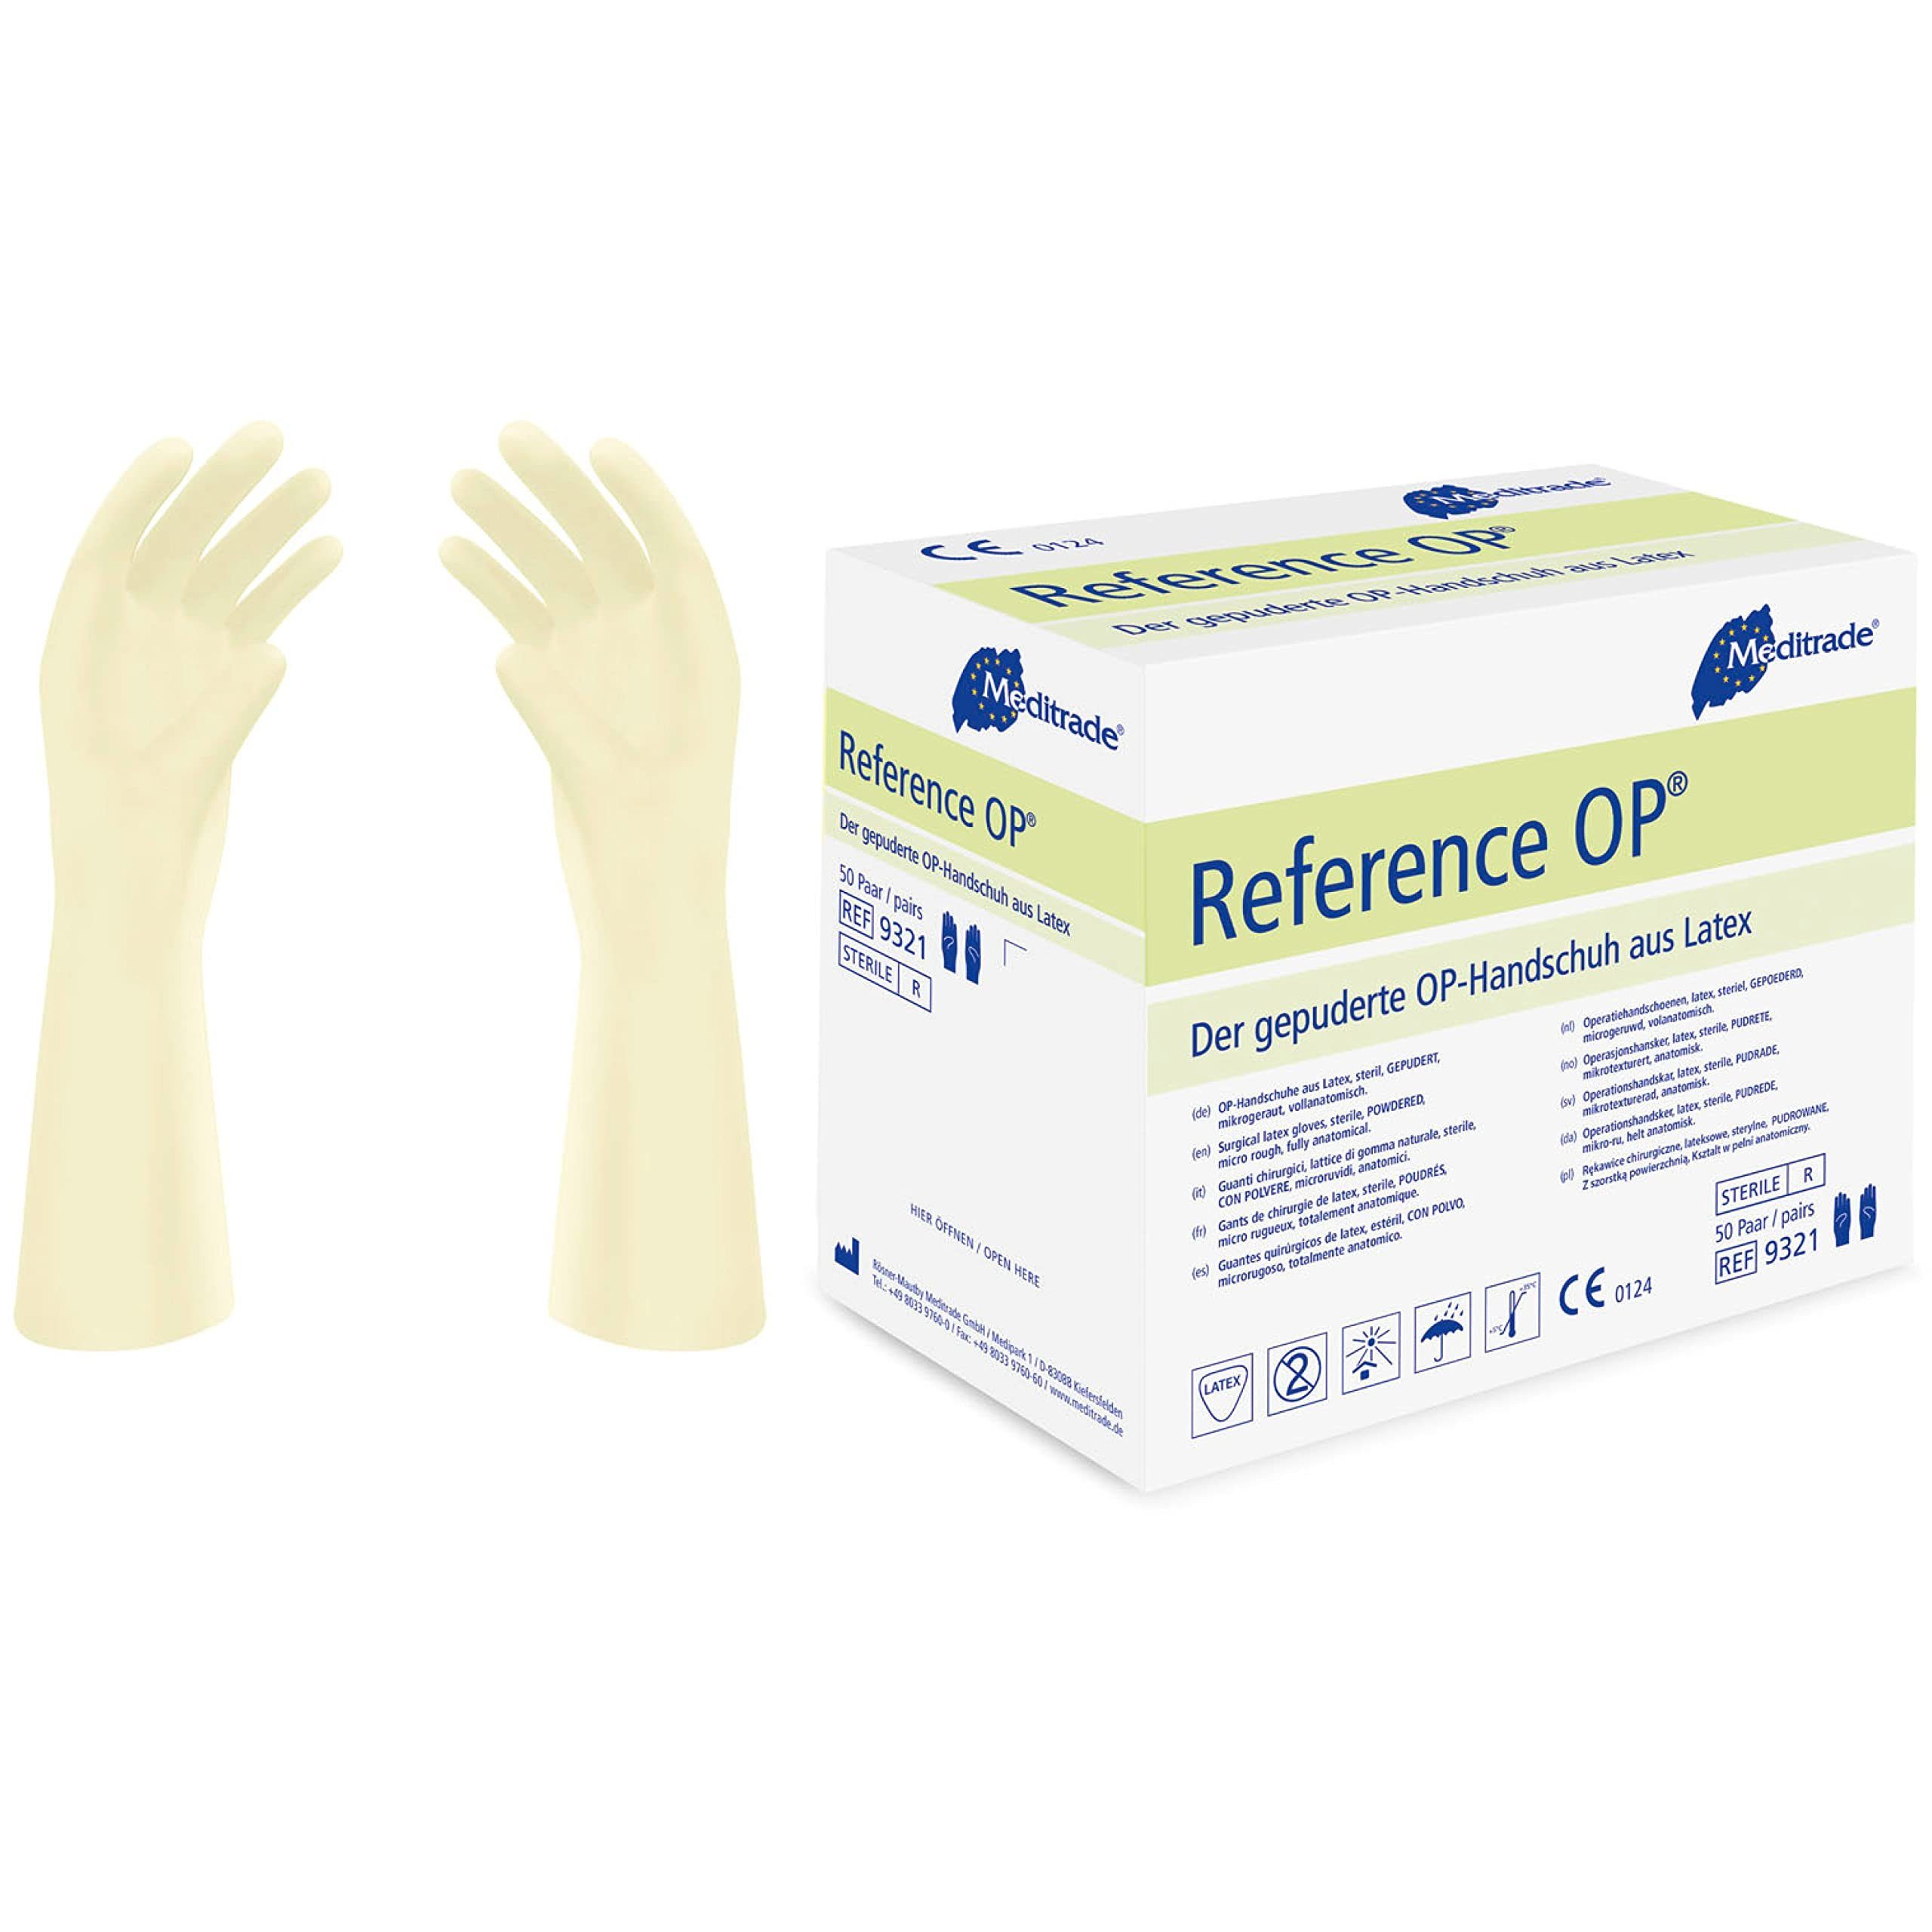 Reference™ 8,5 MediTrade aus Latex, Gr. OPOP-Handschuh Latexhandschuhe gepudert,